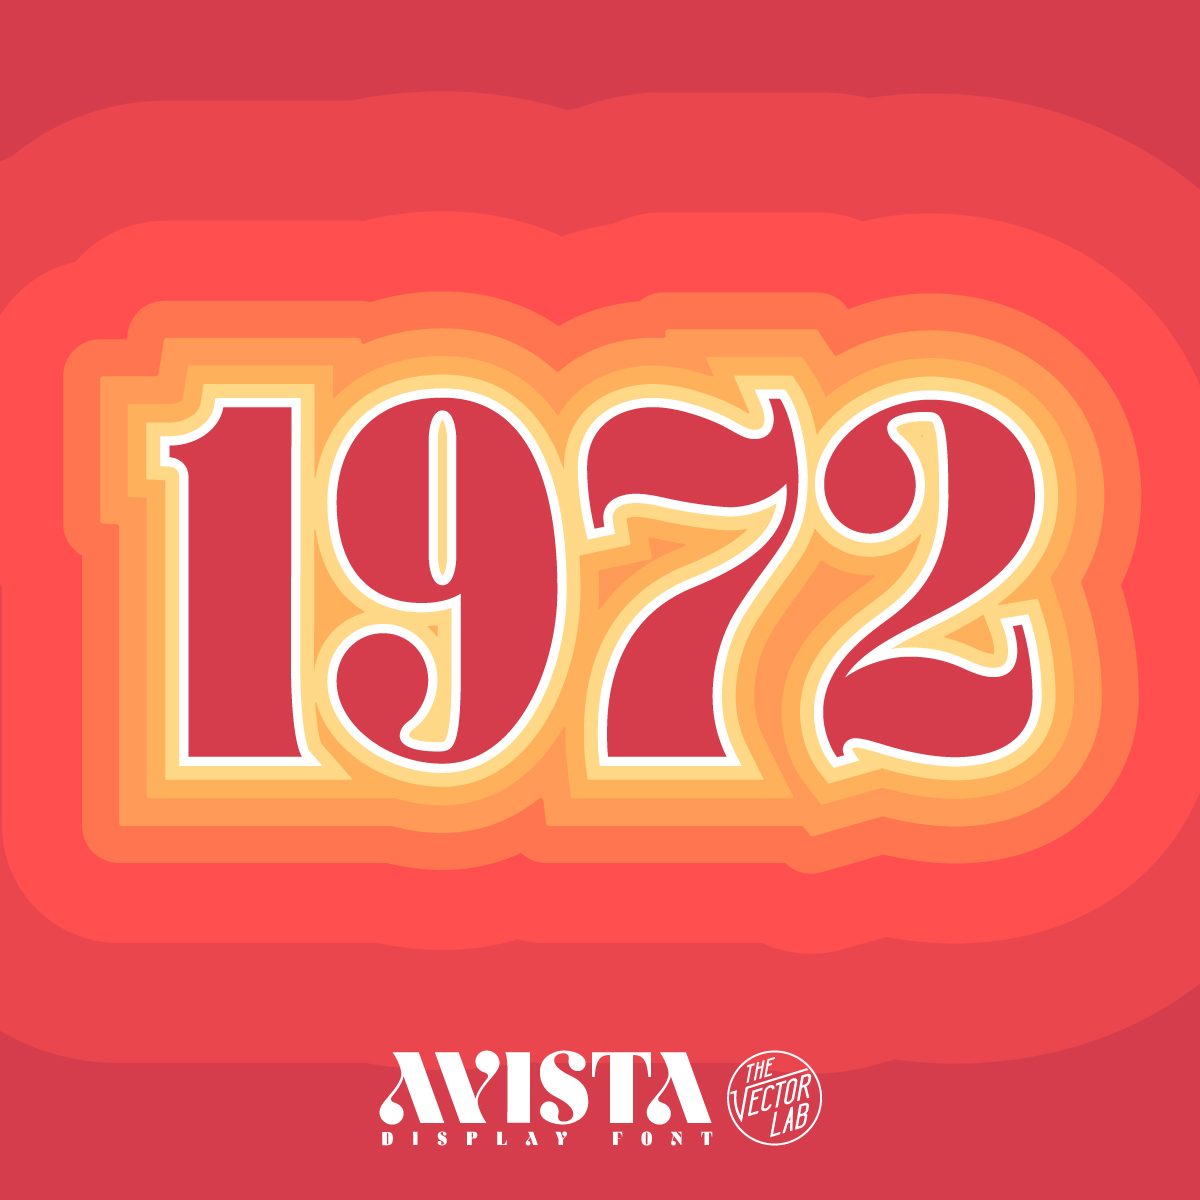 1972 - AVISTA font by Ray Dombroski & TheVectorLab